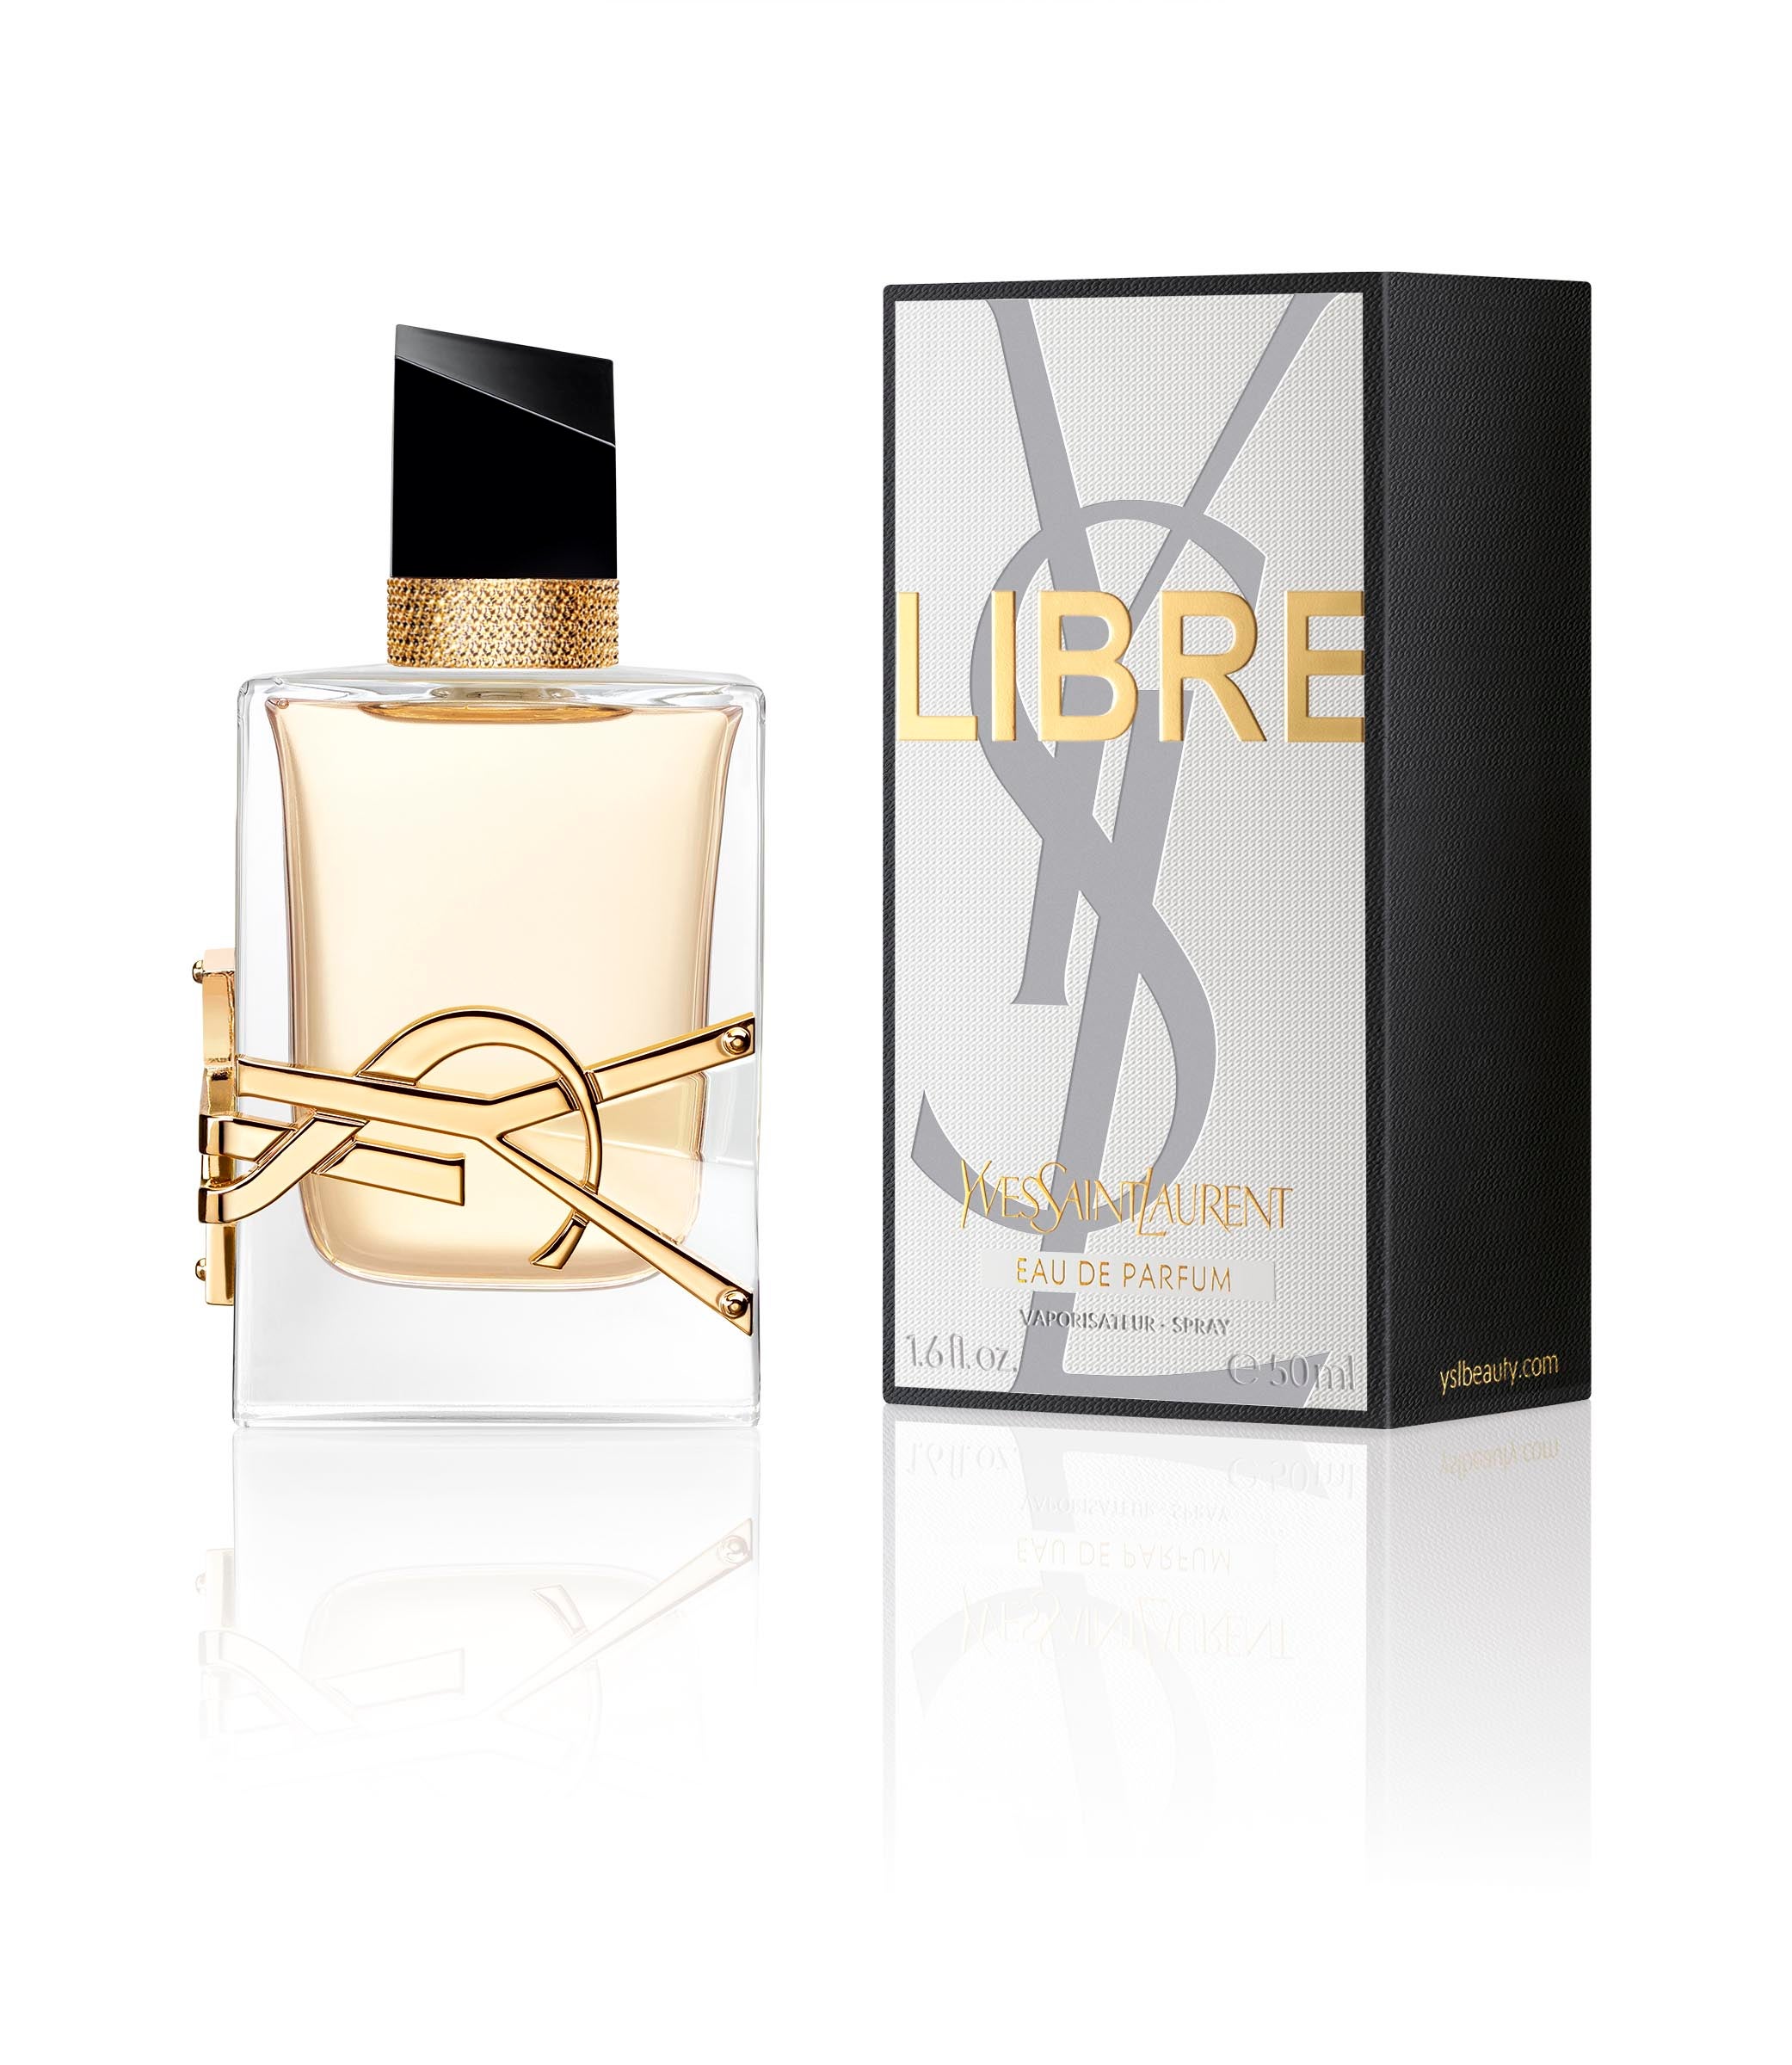 Dua Lipa on Libre Le Parfum, LIBRE